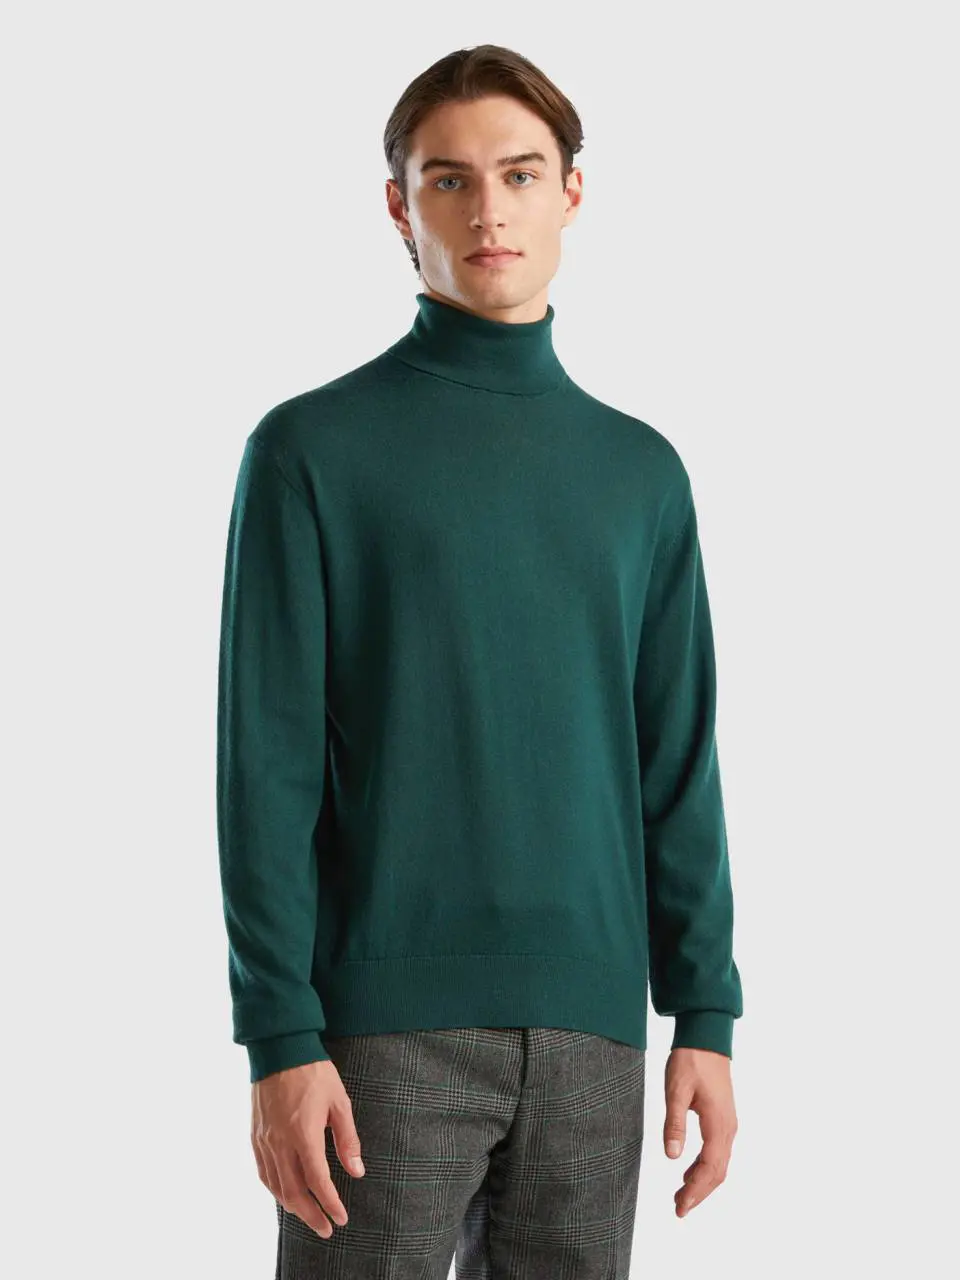 Benetton turtleneck in pure merino wool. 1